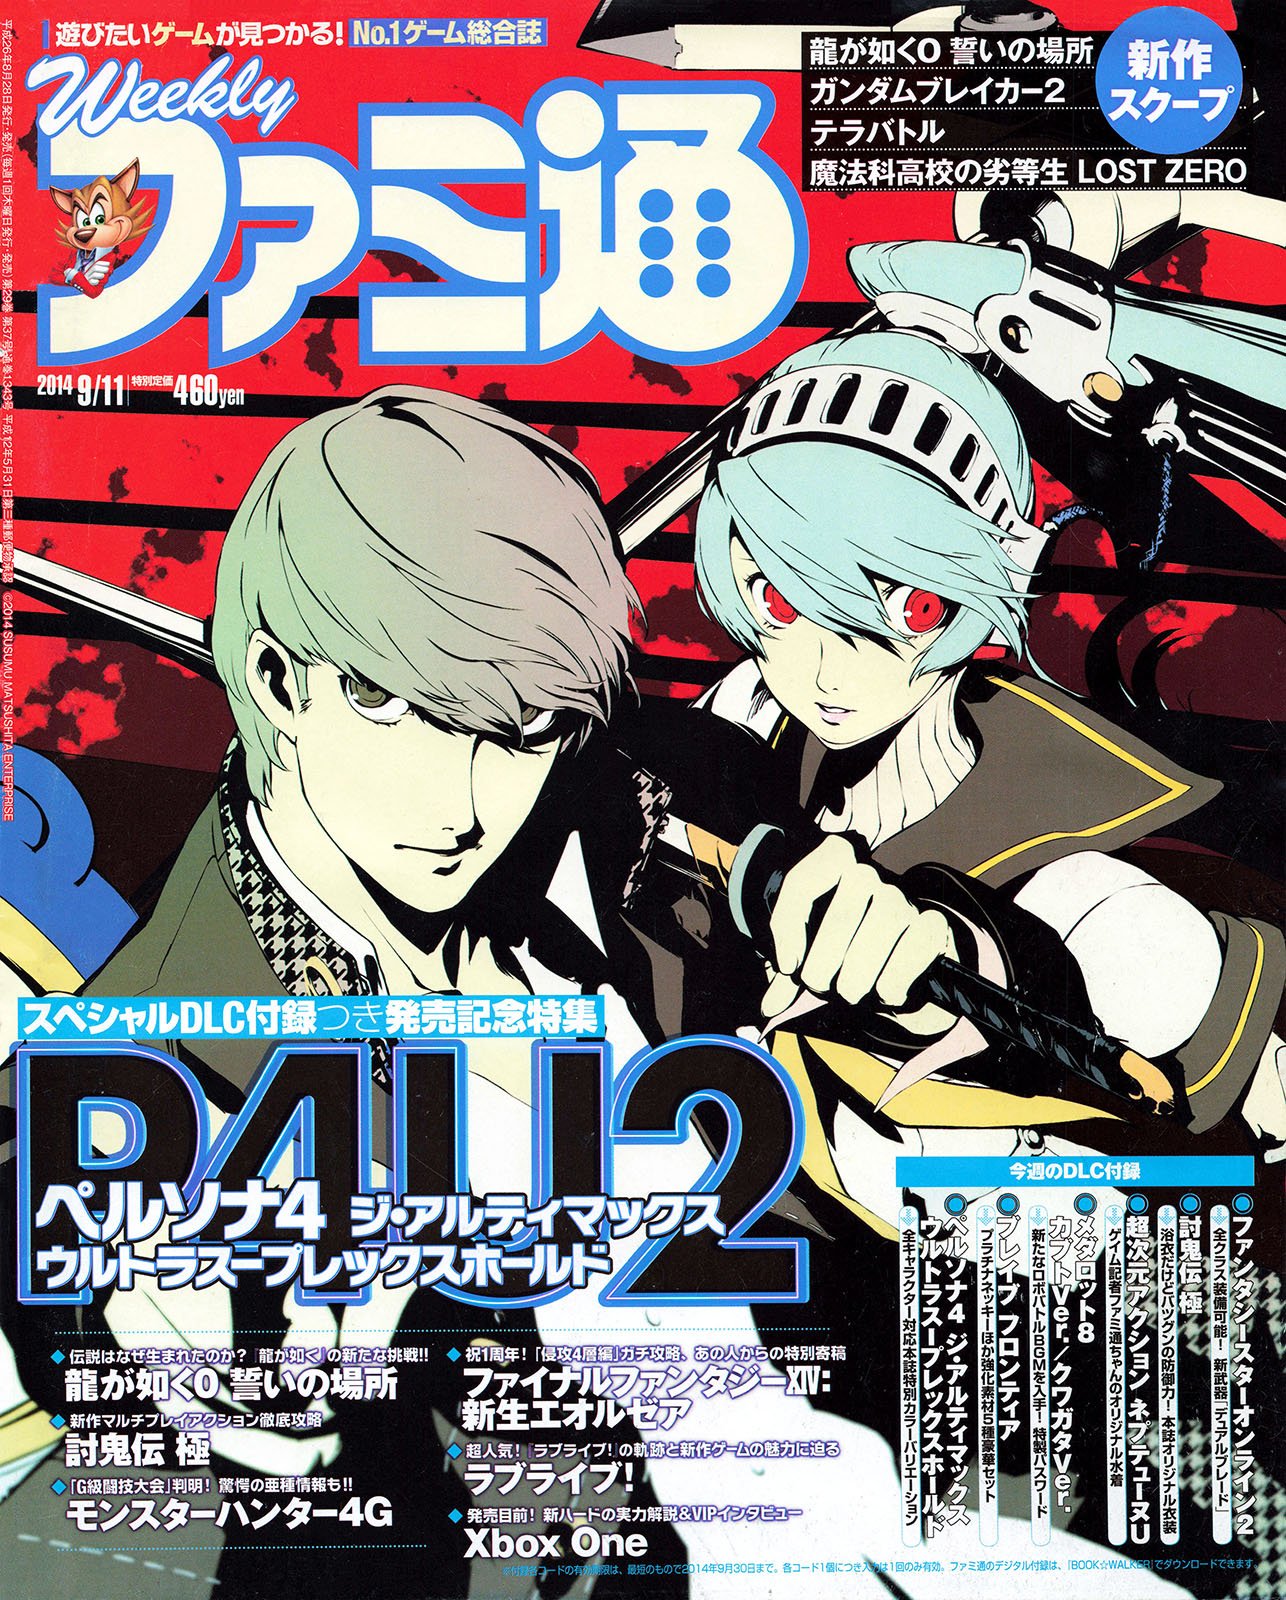 Famitsu Issue 1343 (September 11, 2014)